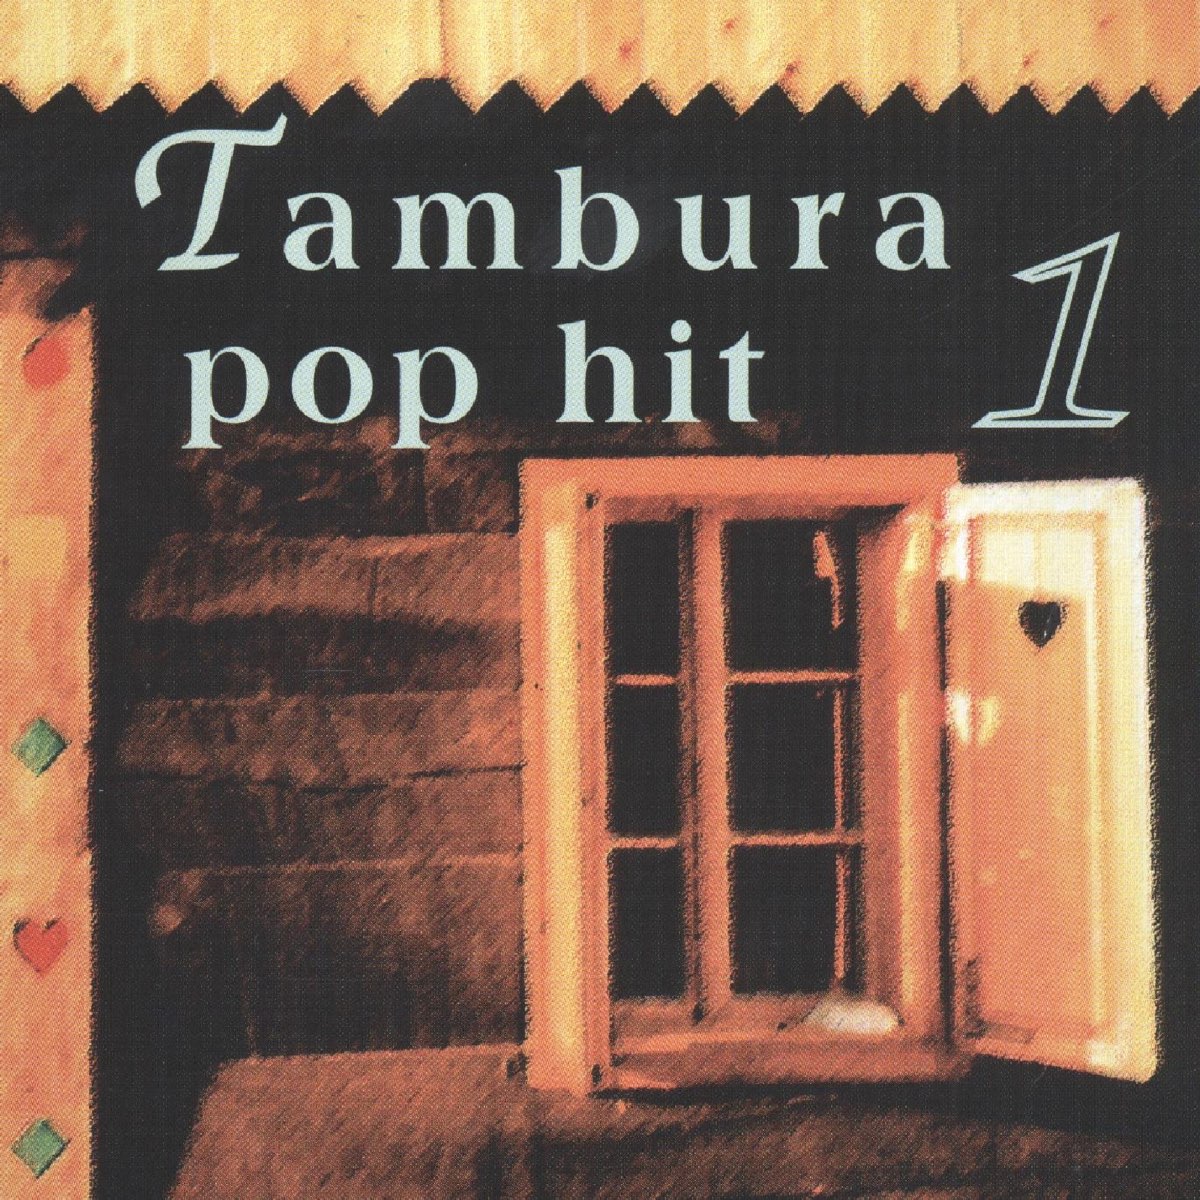 Tambura Pop Hit 1 by Razni Izvođači on Apple Music